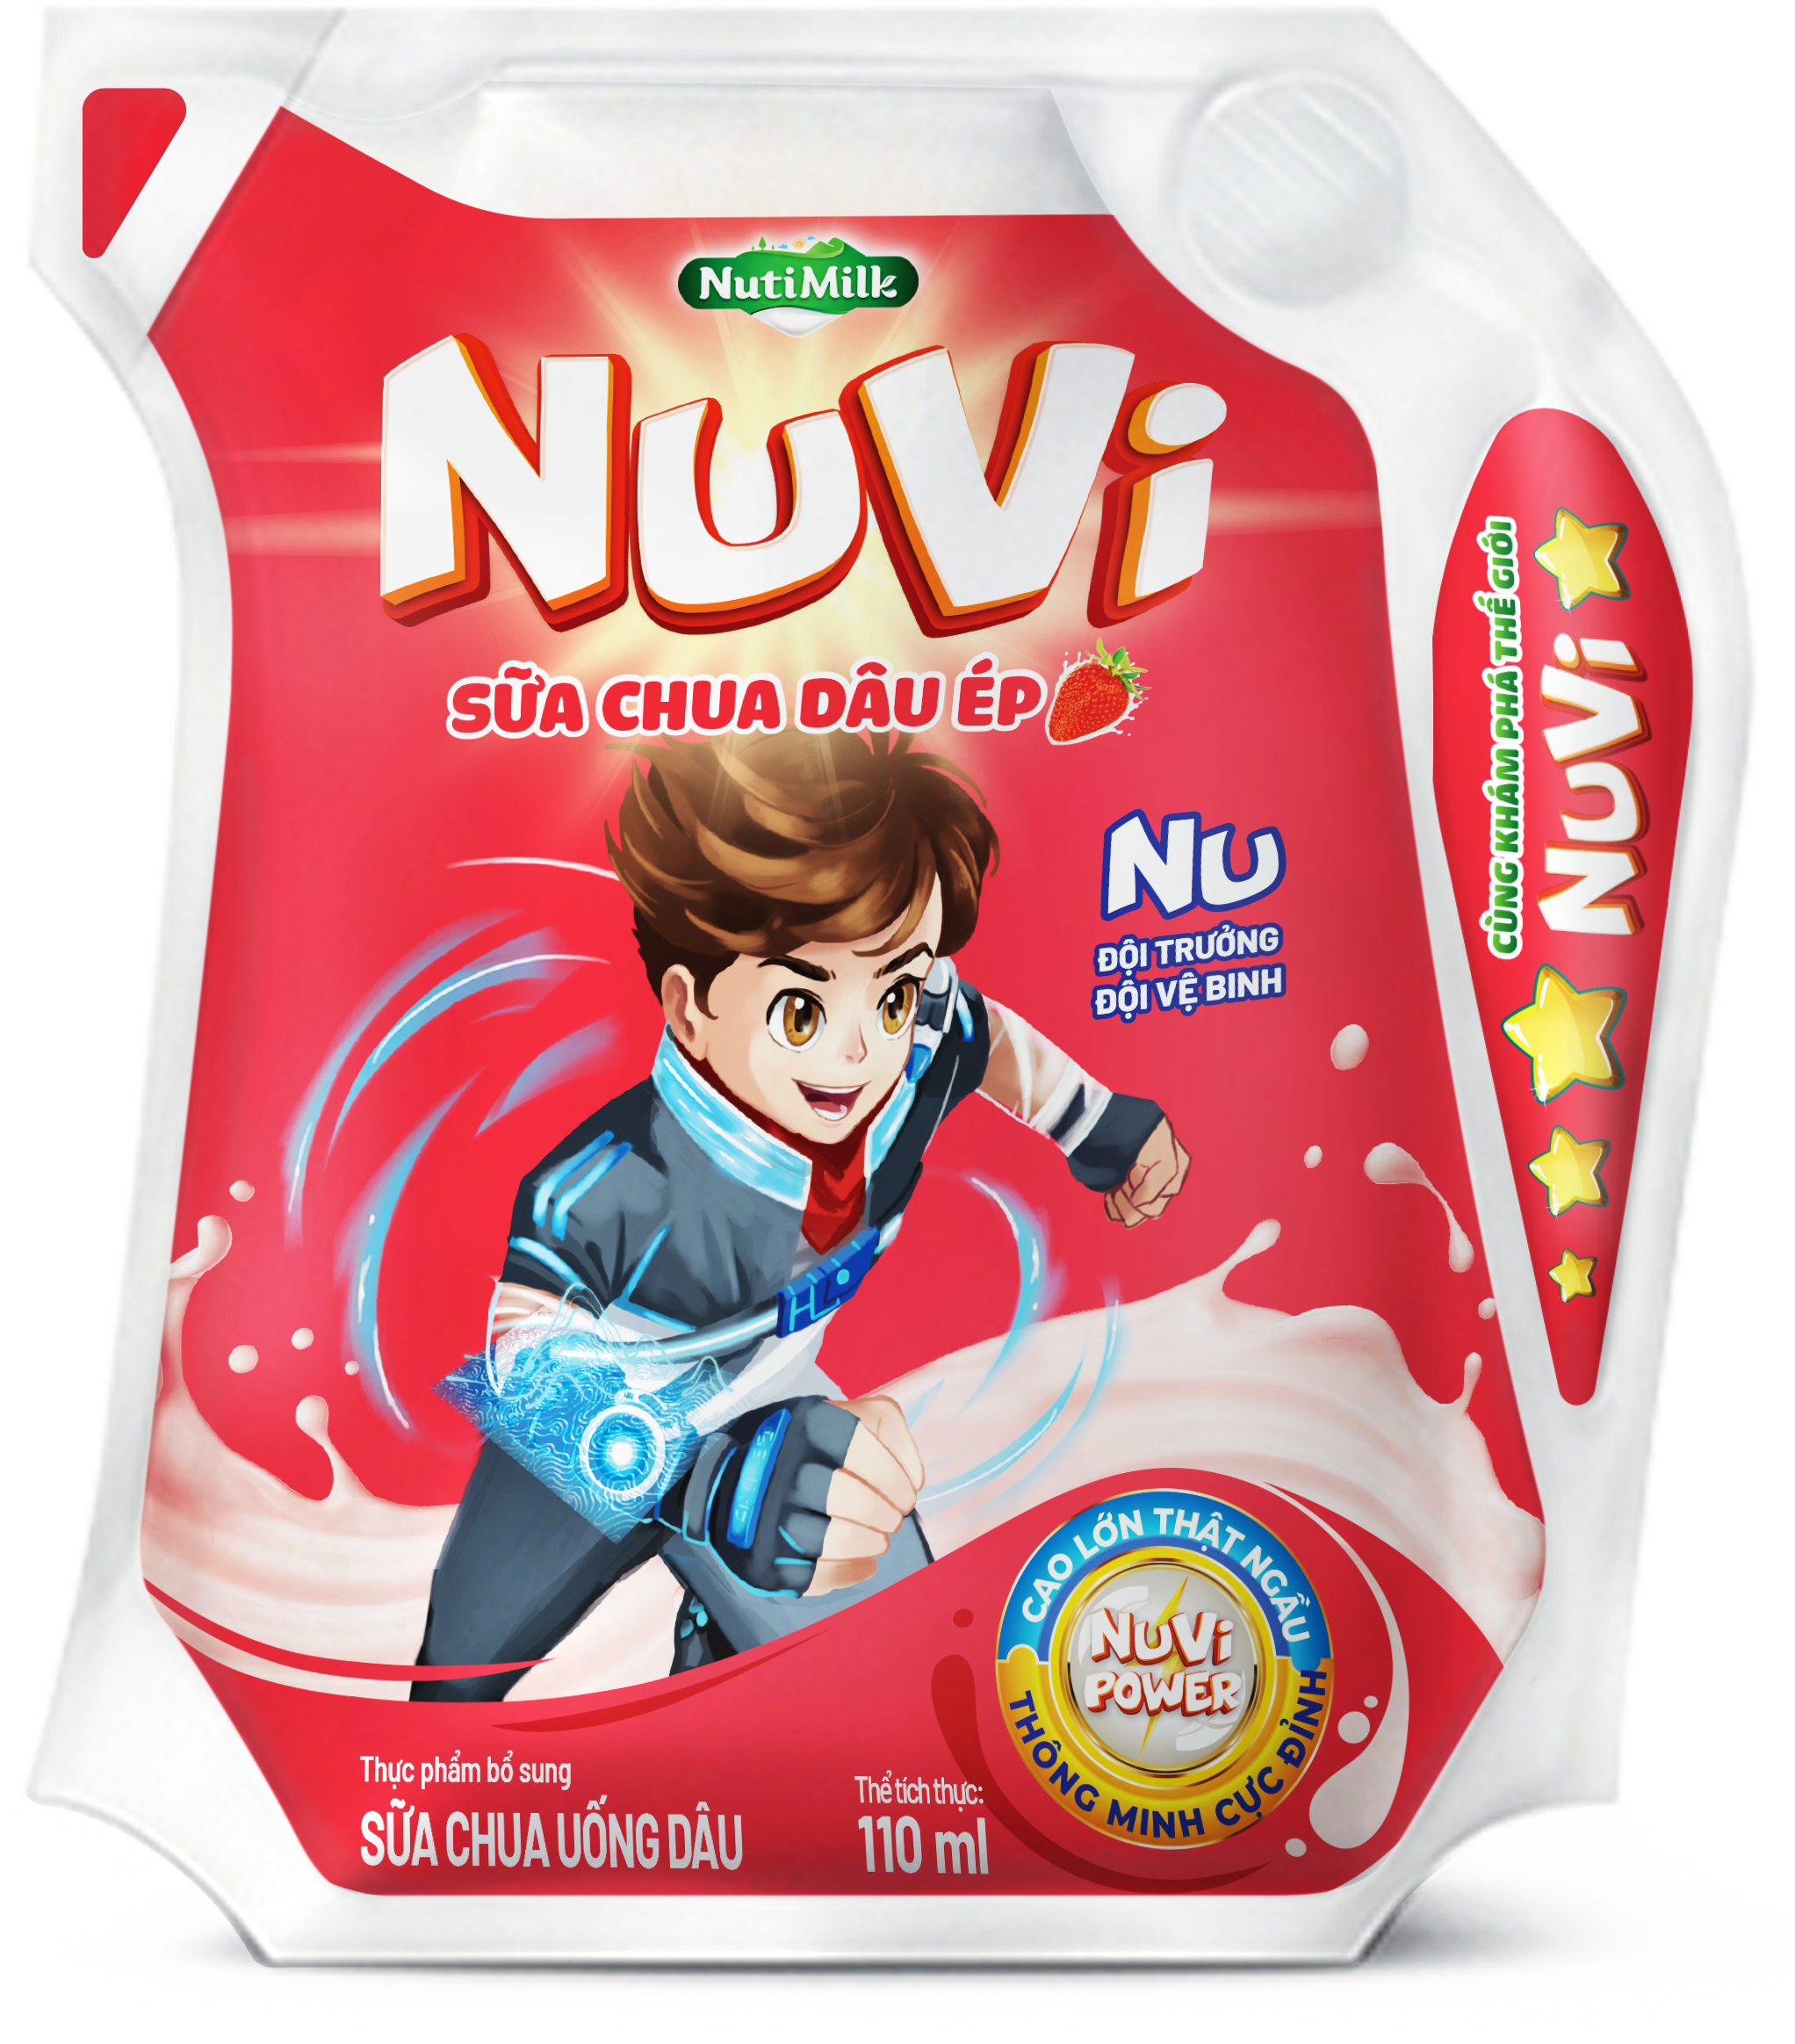 NuVi Sữa chua Dâu Ép túi NuVi Power 110 ml NDT110TI NUTIFOOD